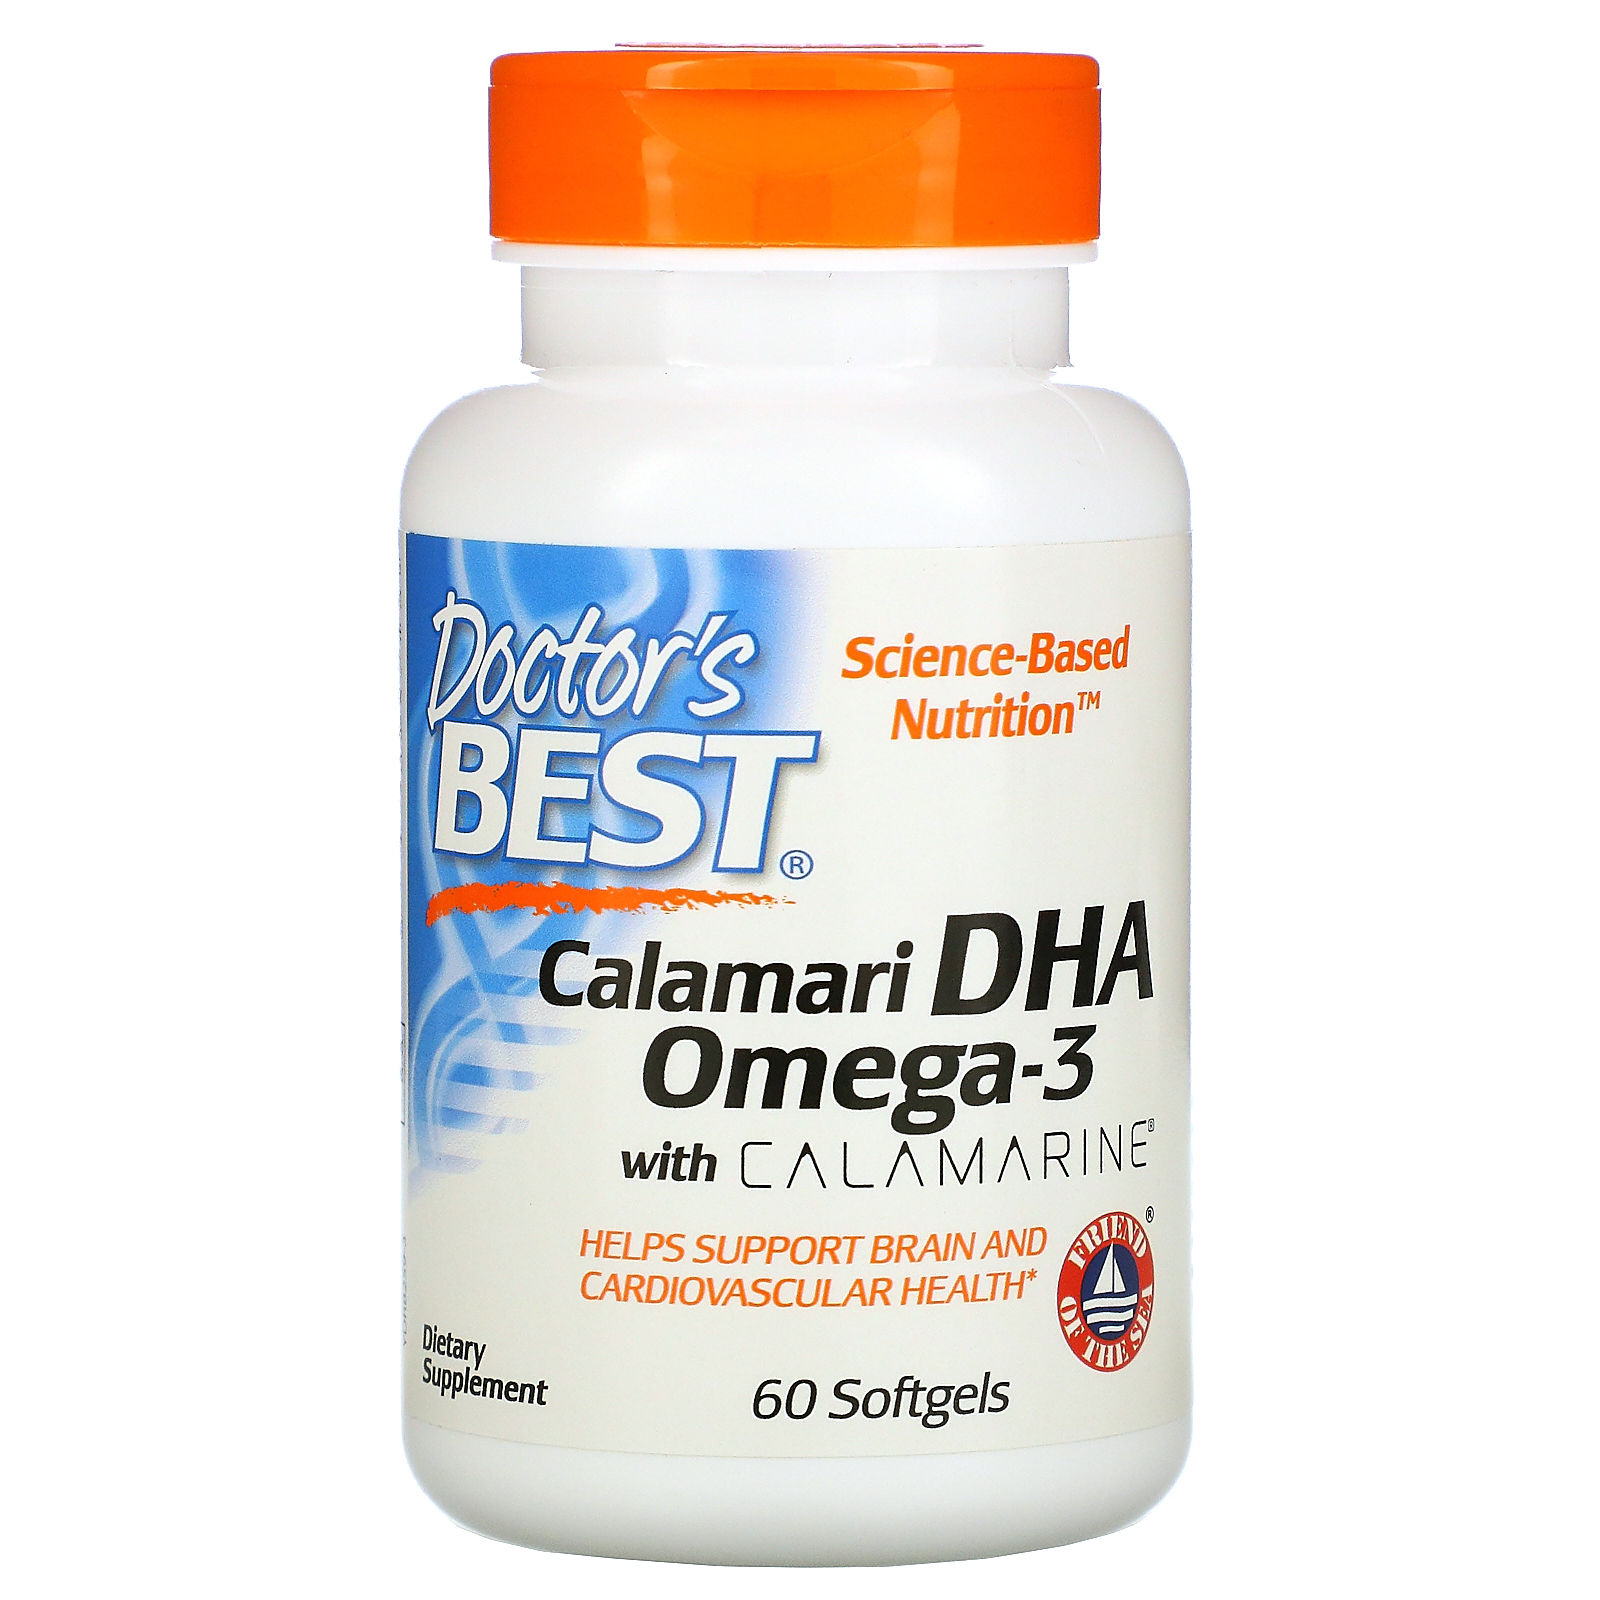 Doctor's Best, Calamari DHA Omega-3 